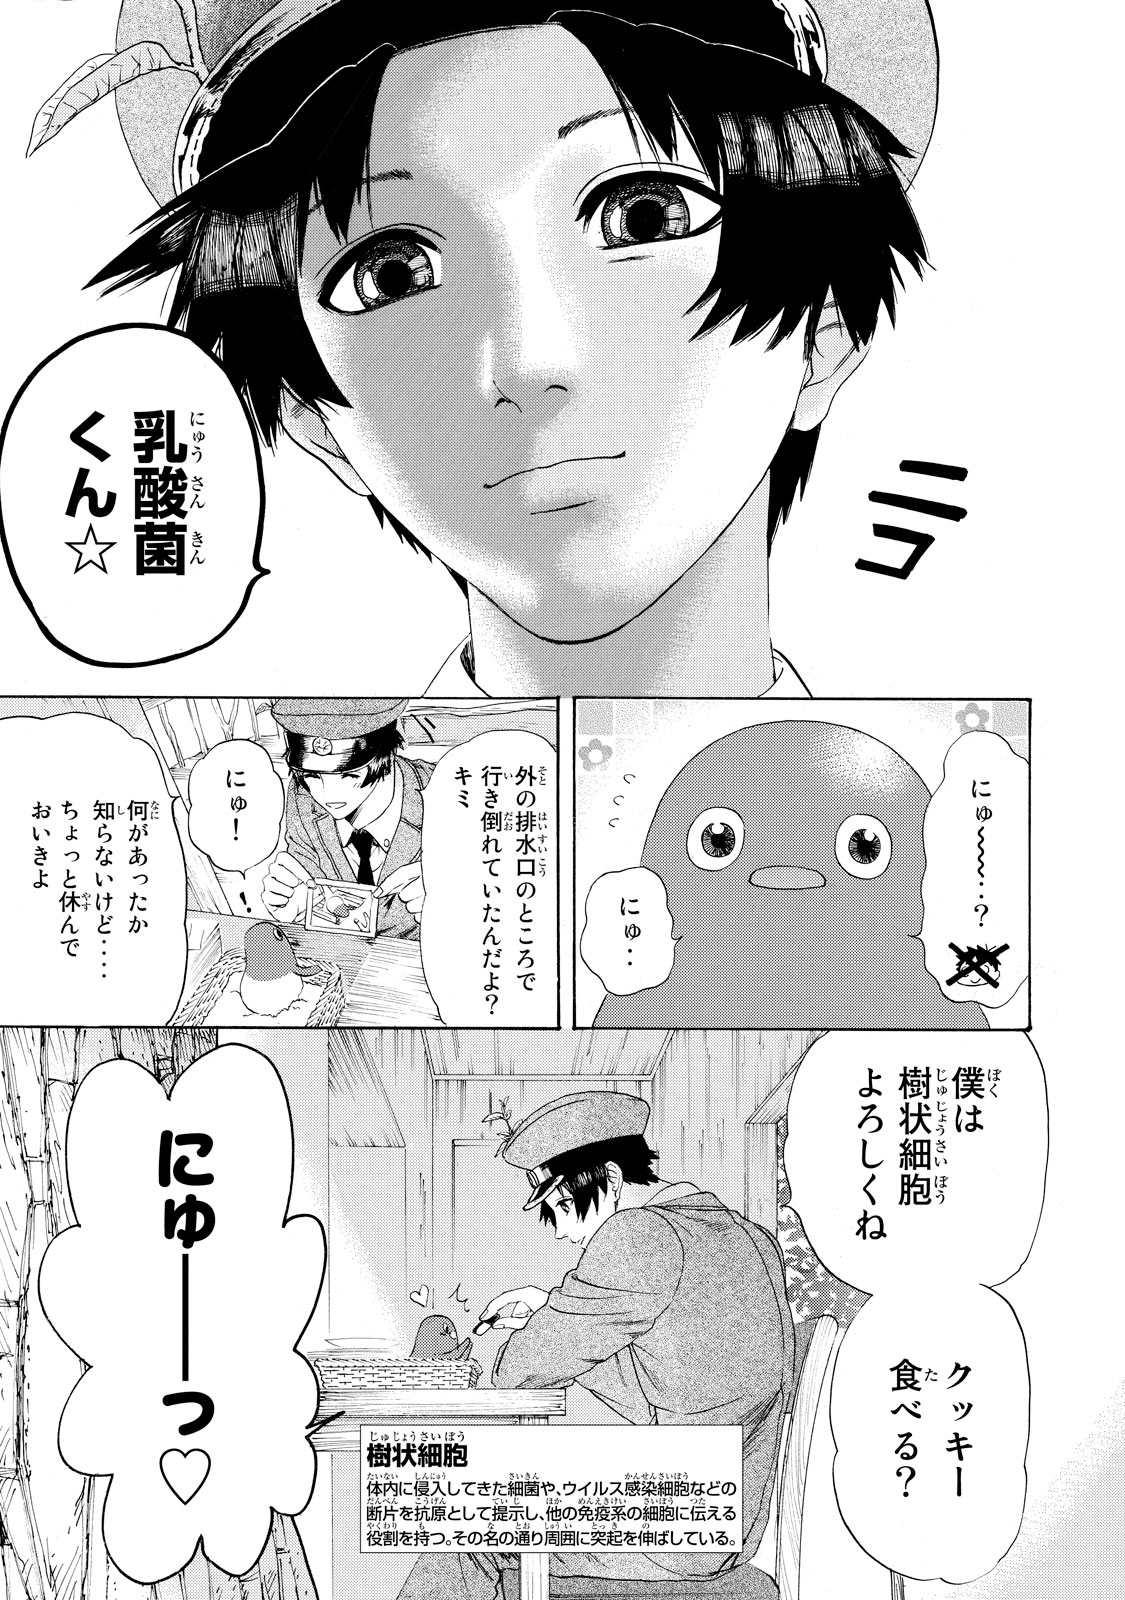 Hataraku Saibou - Chapter 21 - Page 17